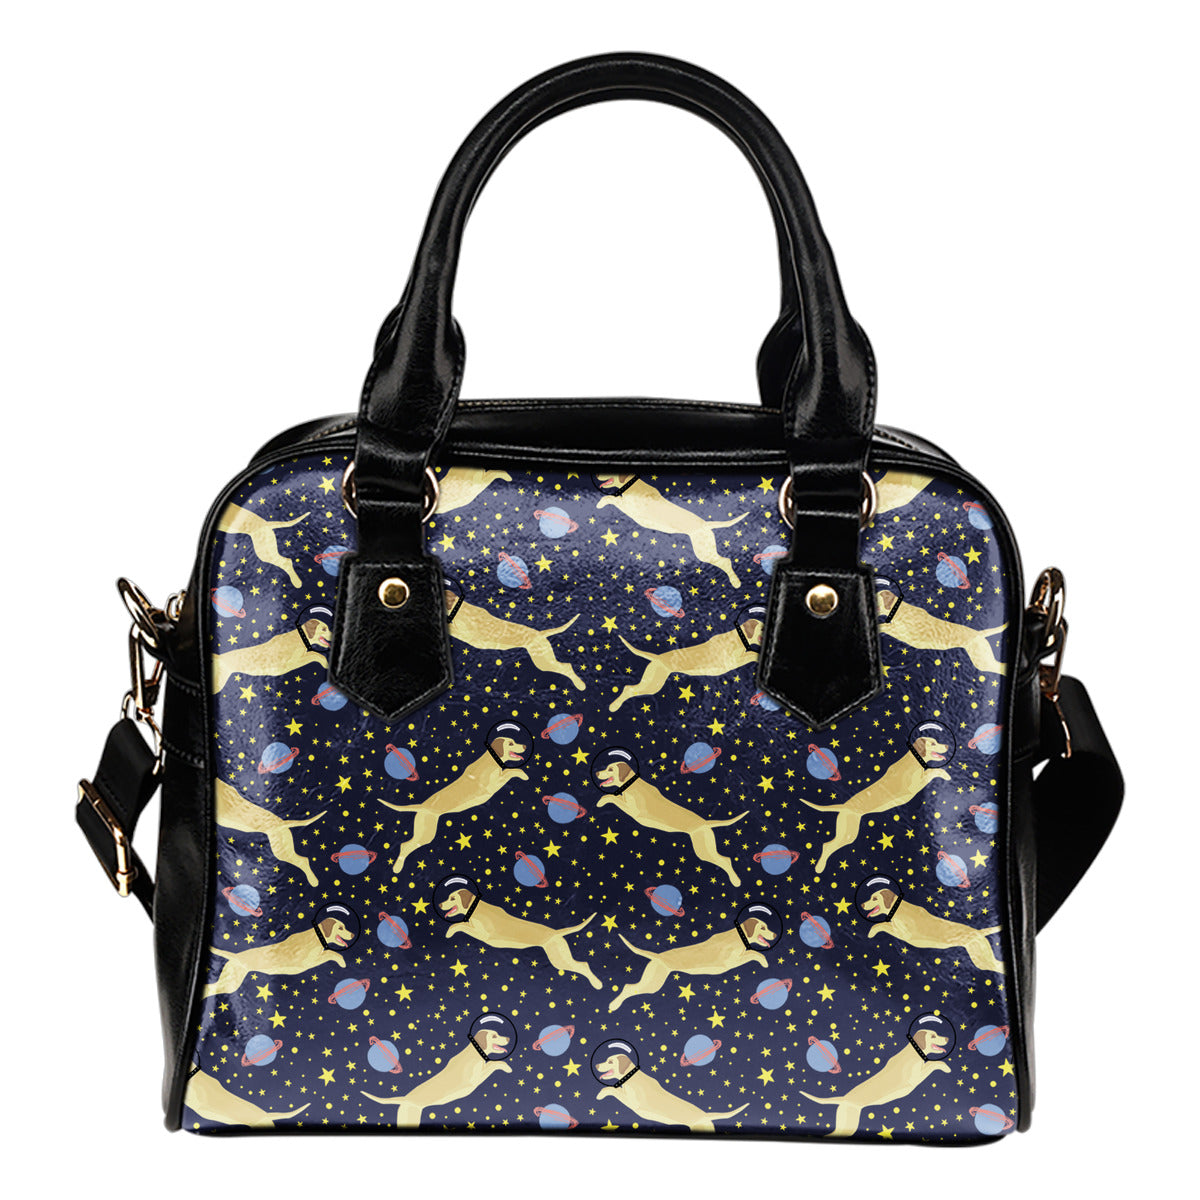 Space Labrador Handbag